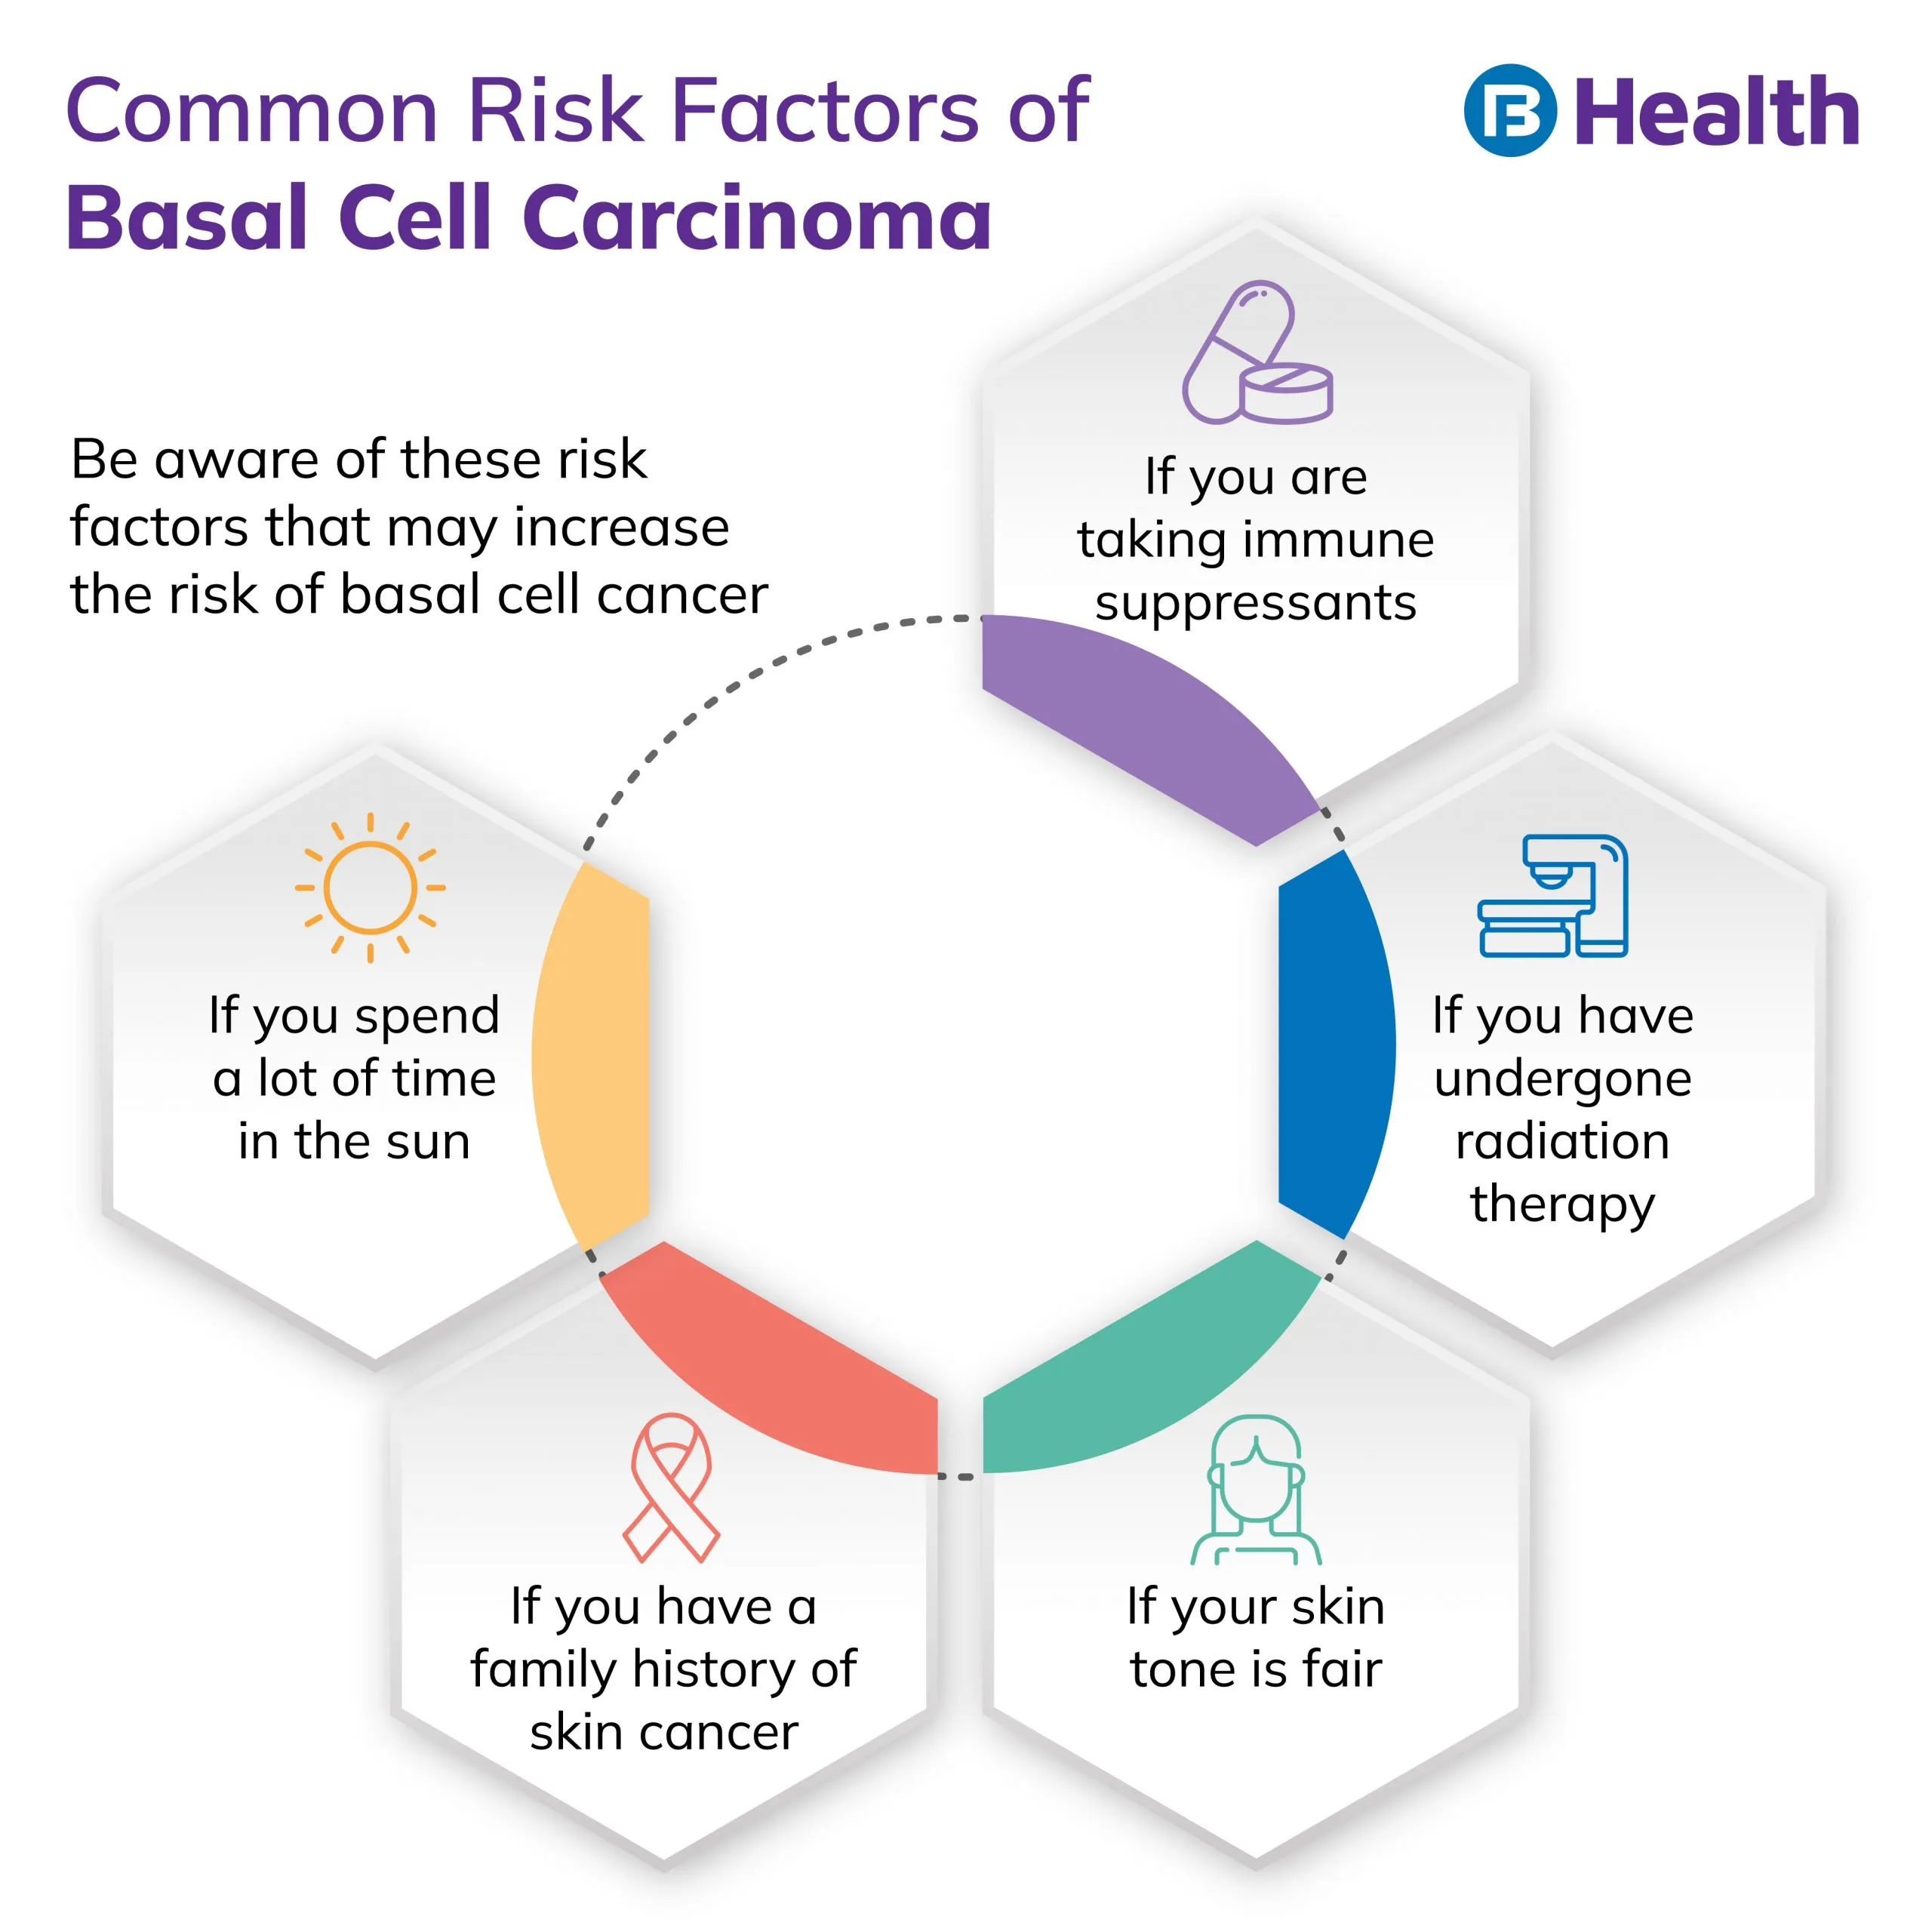 Basal Cell Carcinoma risk factors